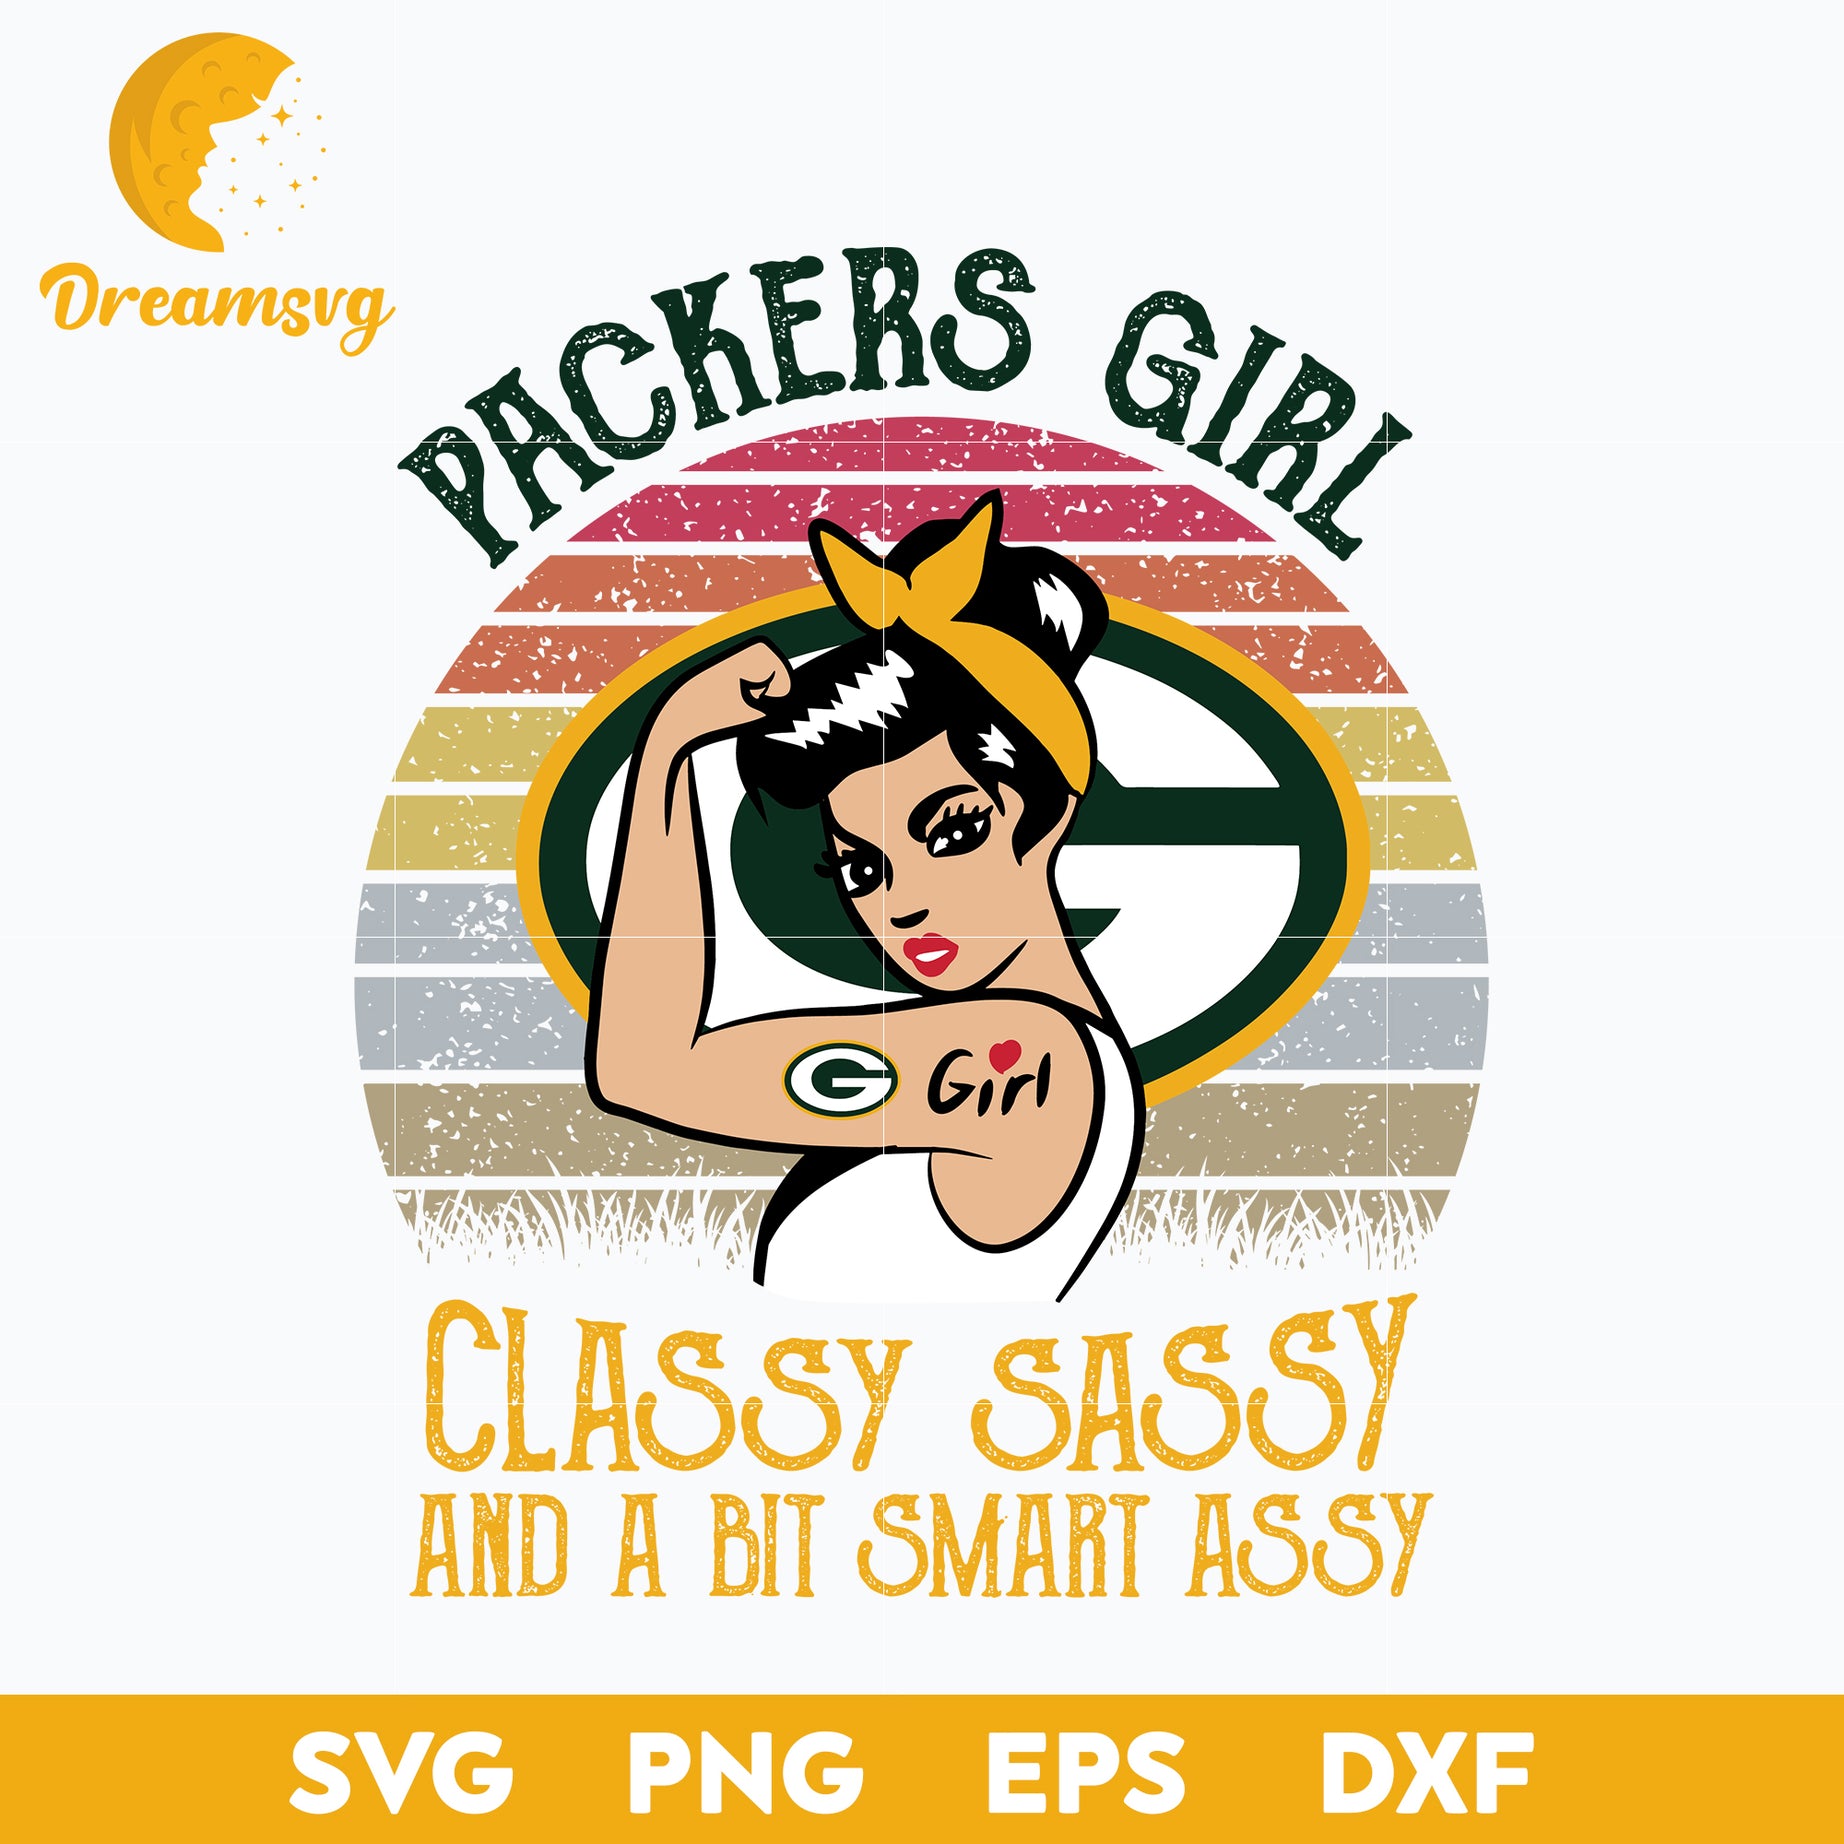 Green Bay Packers Girl Classy Sassy And A Bit Smart Assy Nfl Svg, Sport Svg, Nfl Svg, Png, Dxf, Eps Digital File.